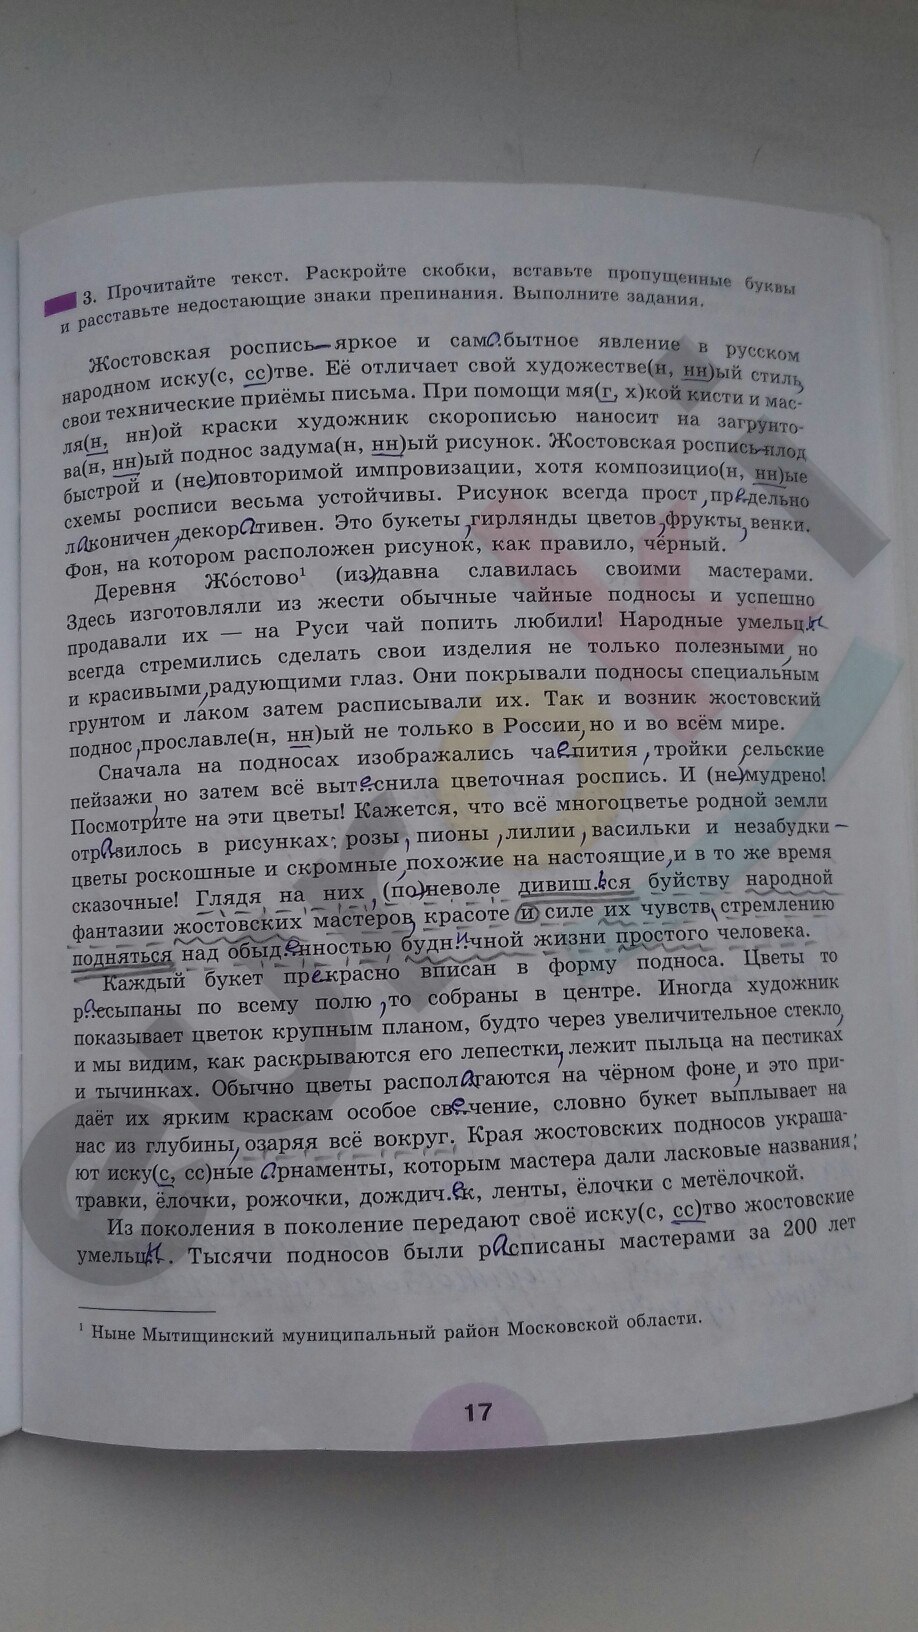 гдз 8 класс рабочая тетрадь часть 2 страница 17 русский язык Рыбченкова, Александрова